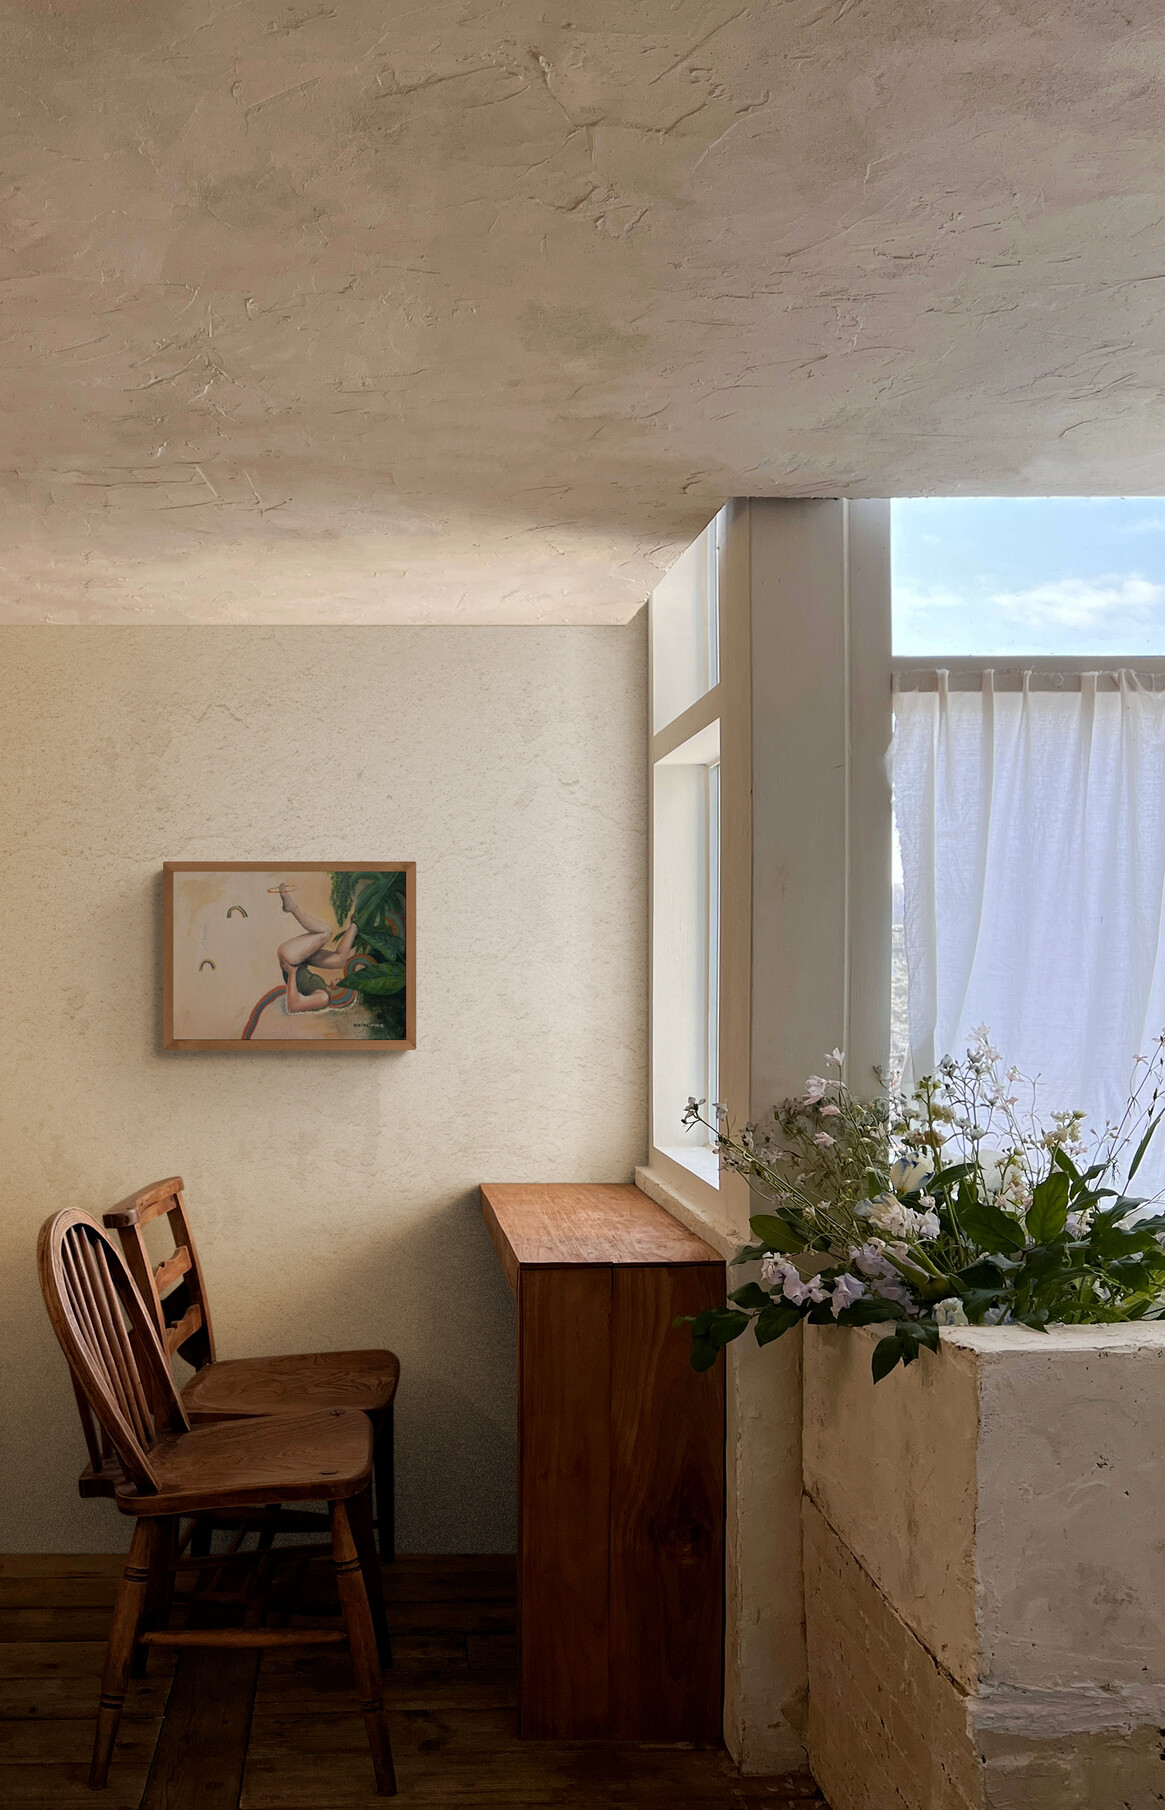 Rustic interior space with artwork by artterra artist, Rachel Marie